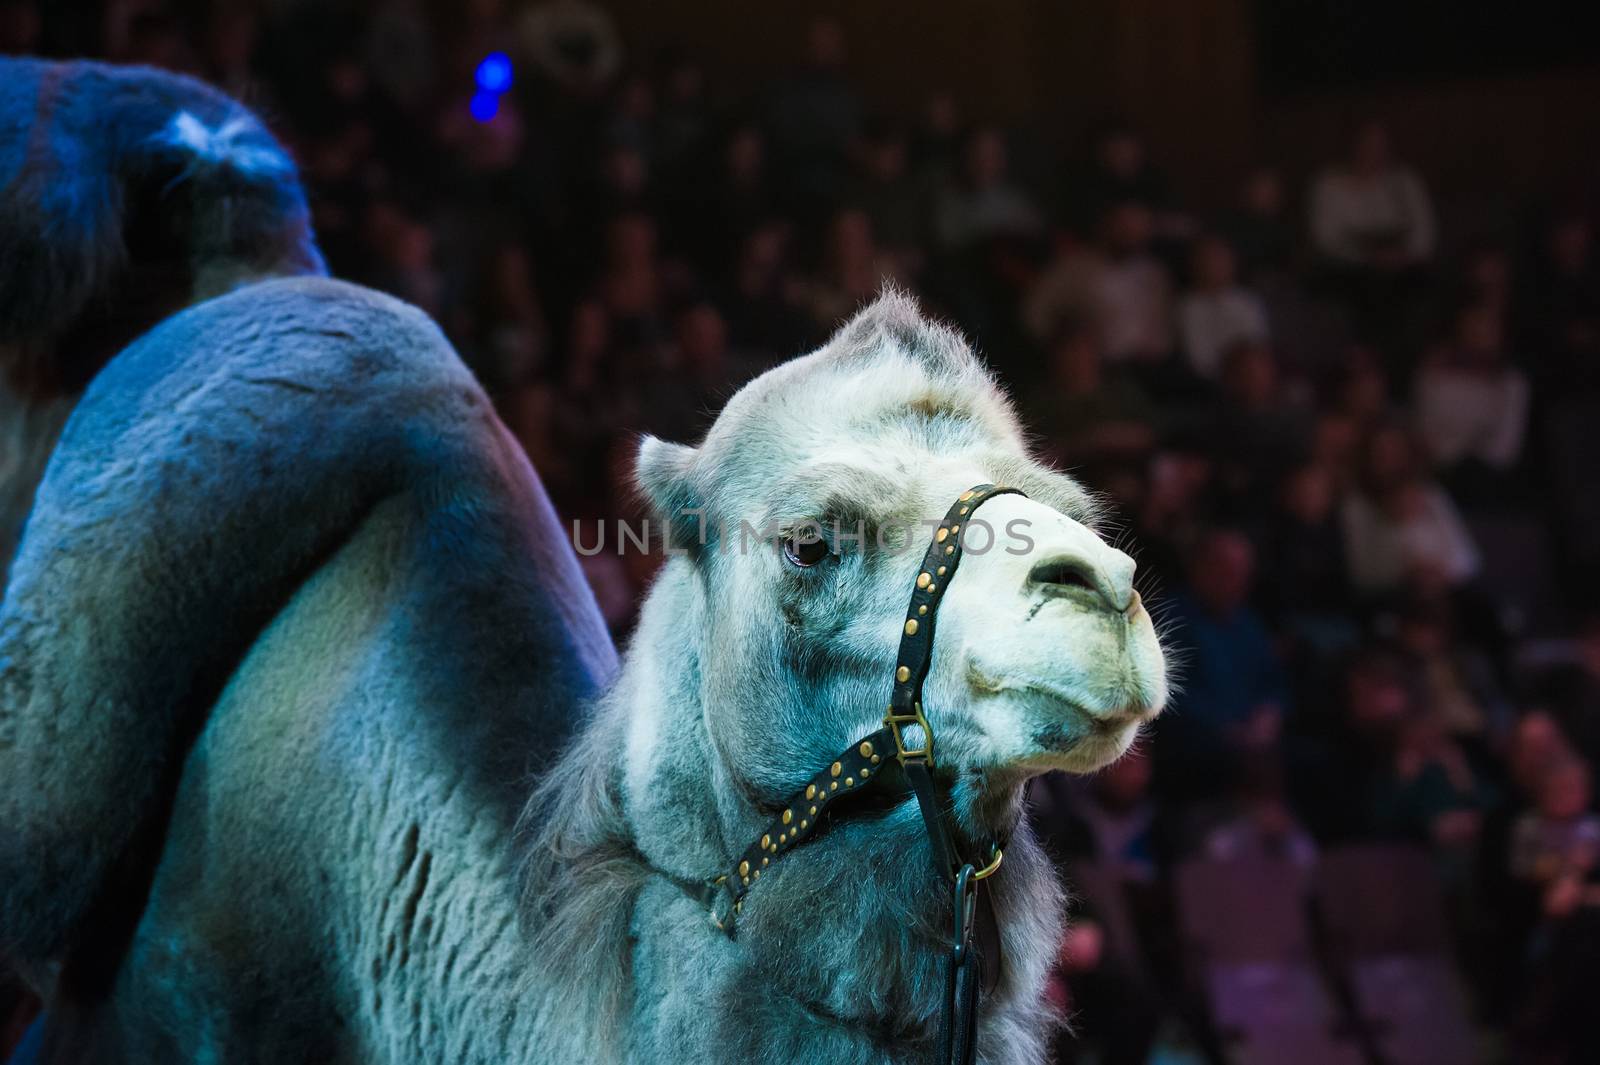 Circus performance. Circus camel performs in the circus